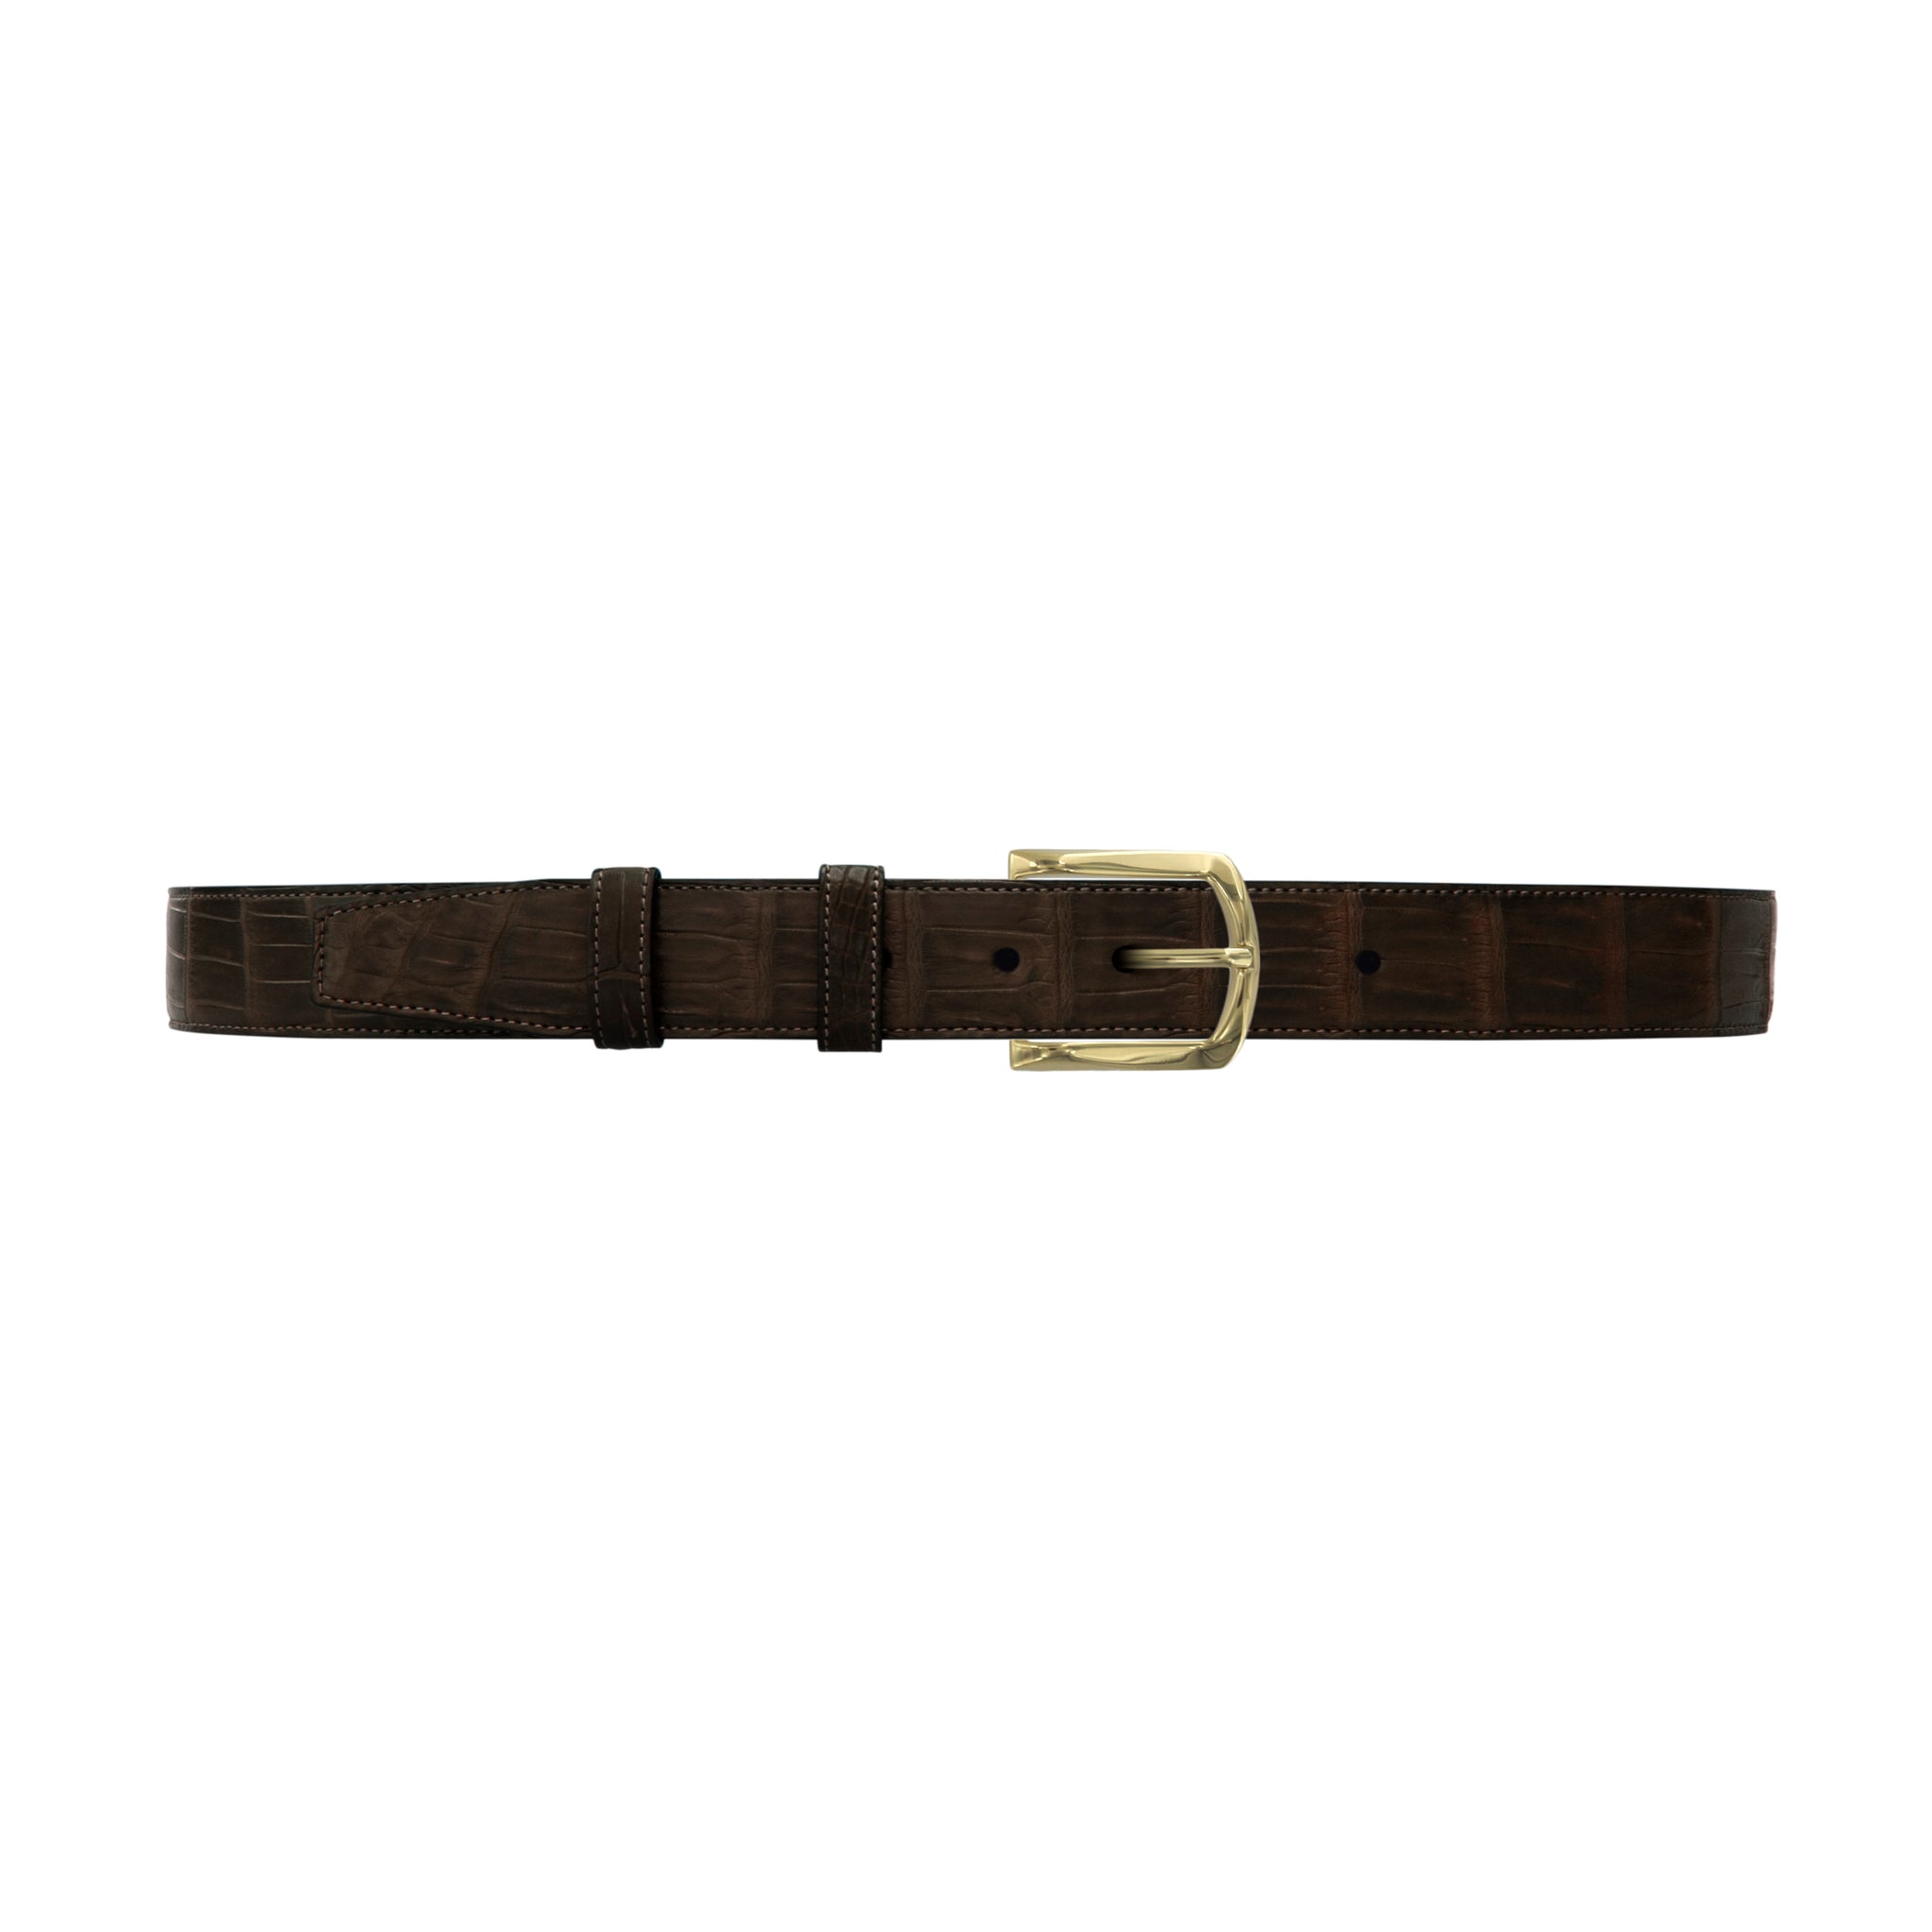 1 1/4" Espresso Classic Belt with Sutton Dress Buckle in Brass